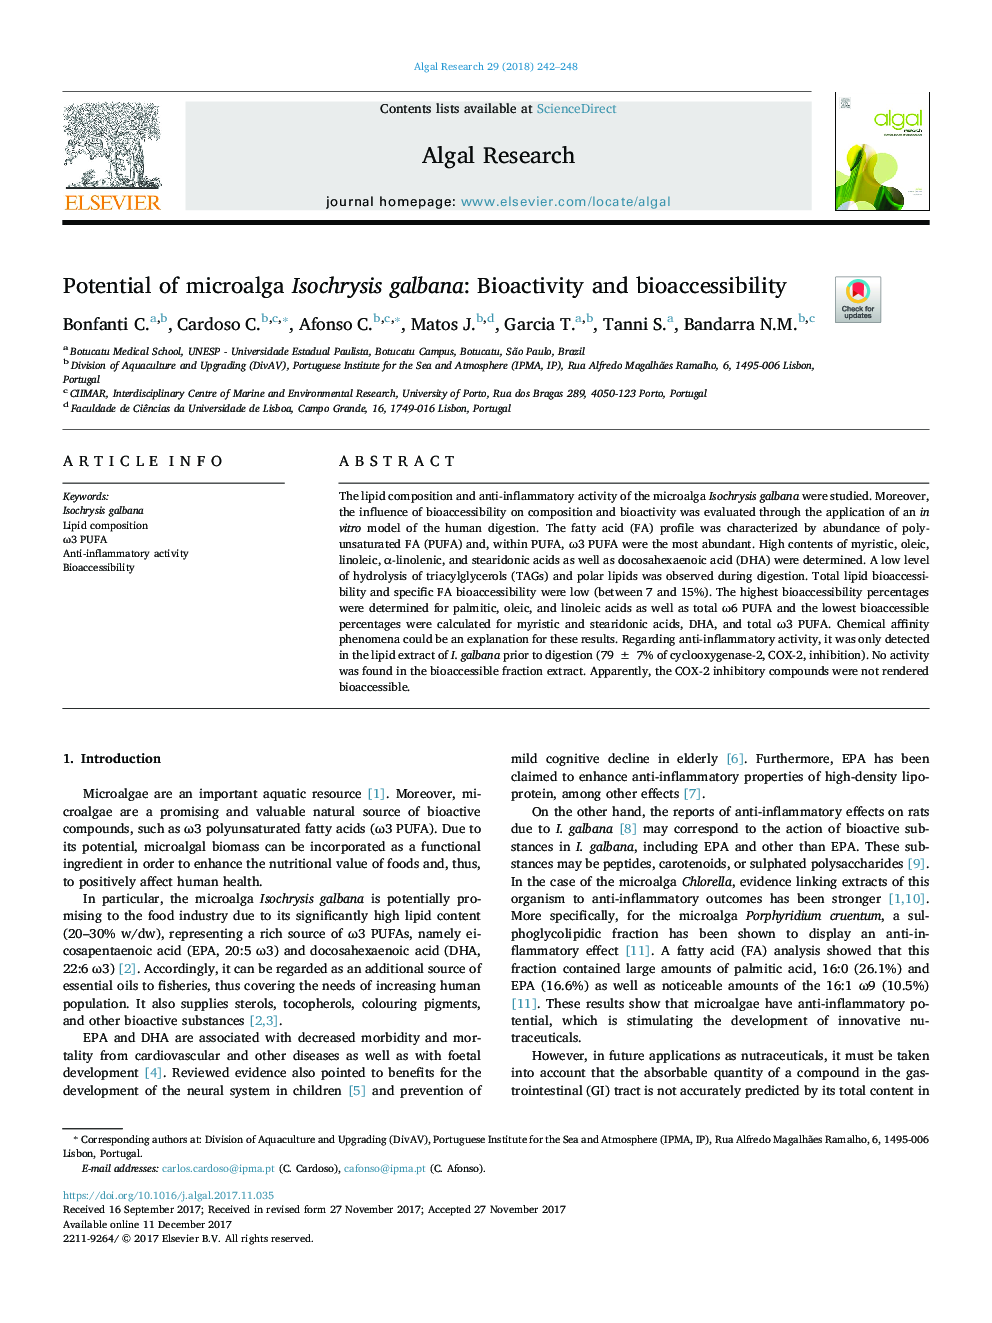 Potential of microalga Isochrysis galbana: Bioactivity and bioaccessibility